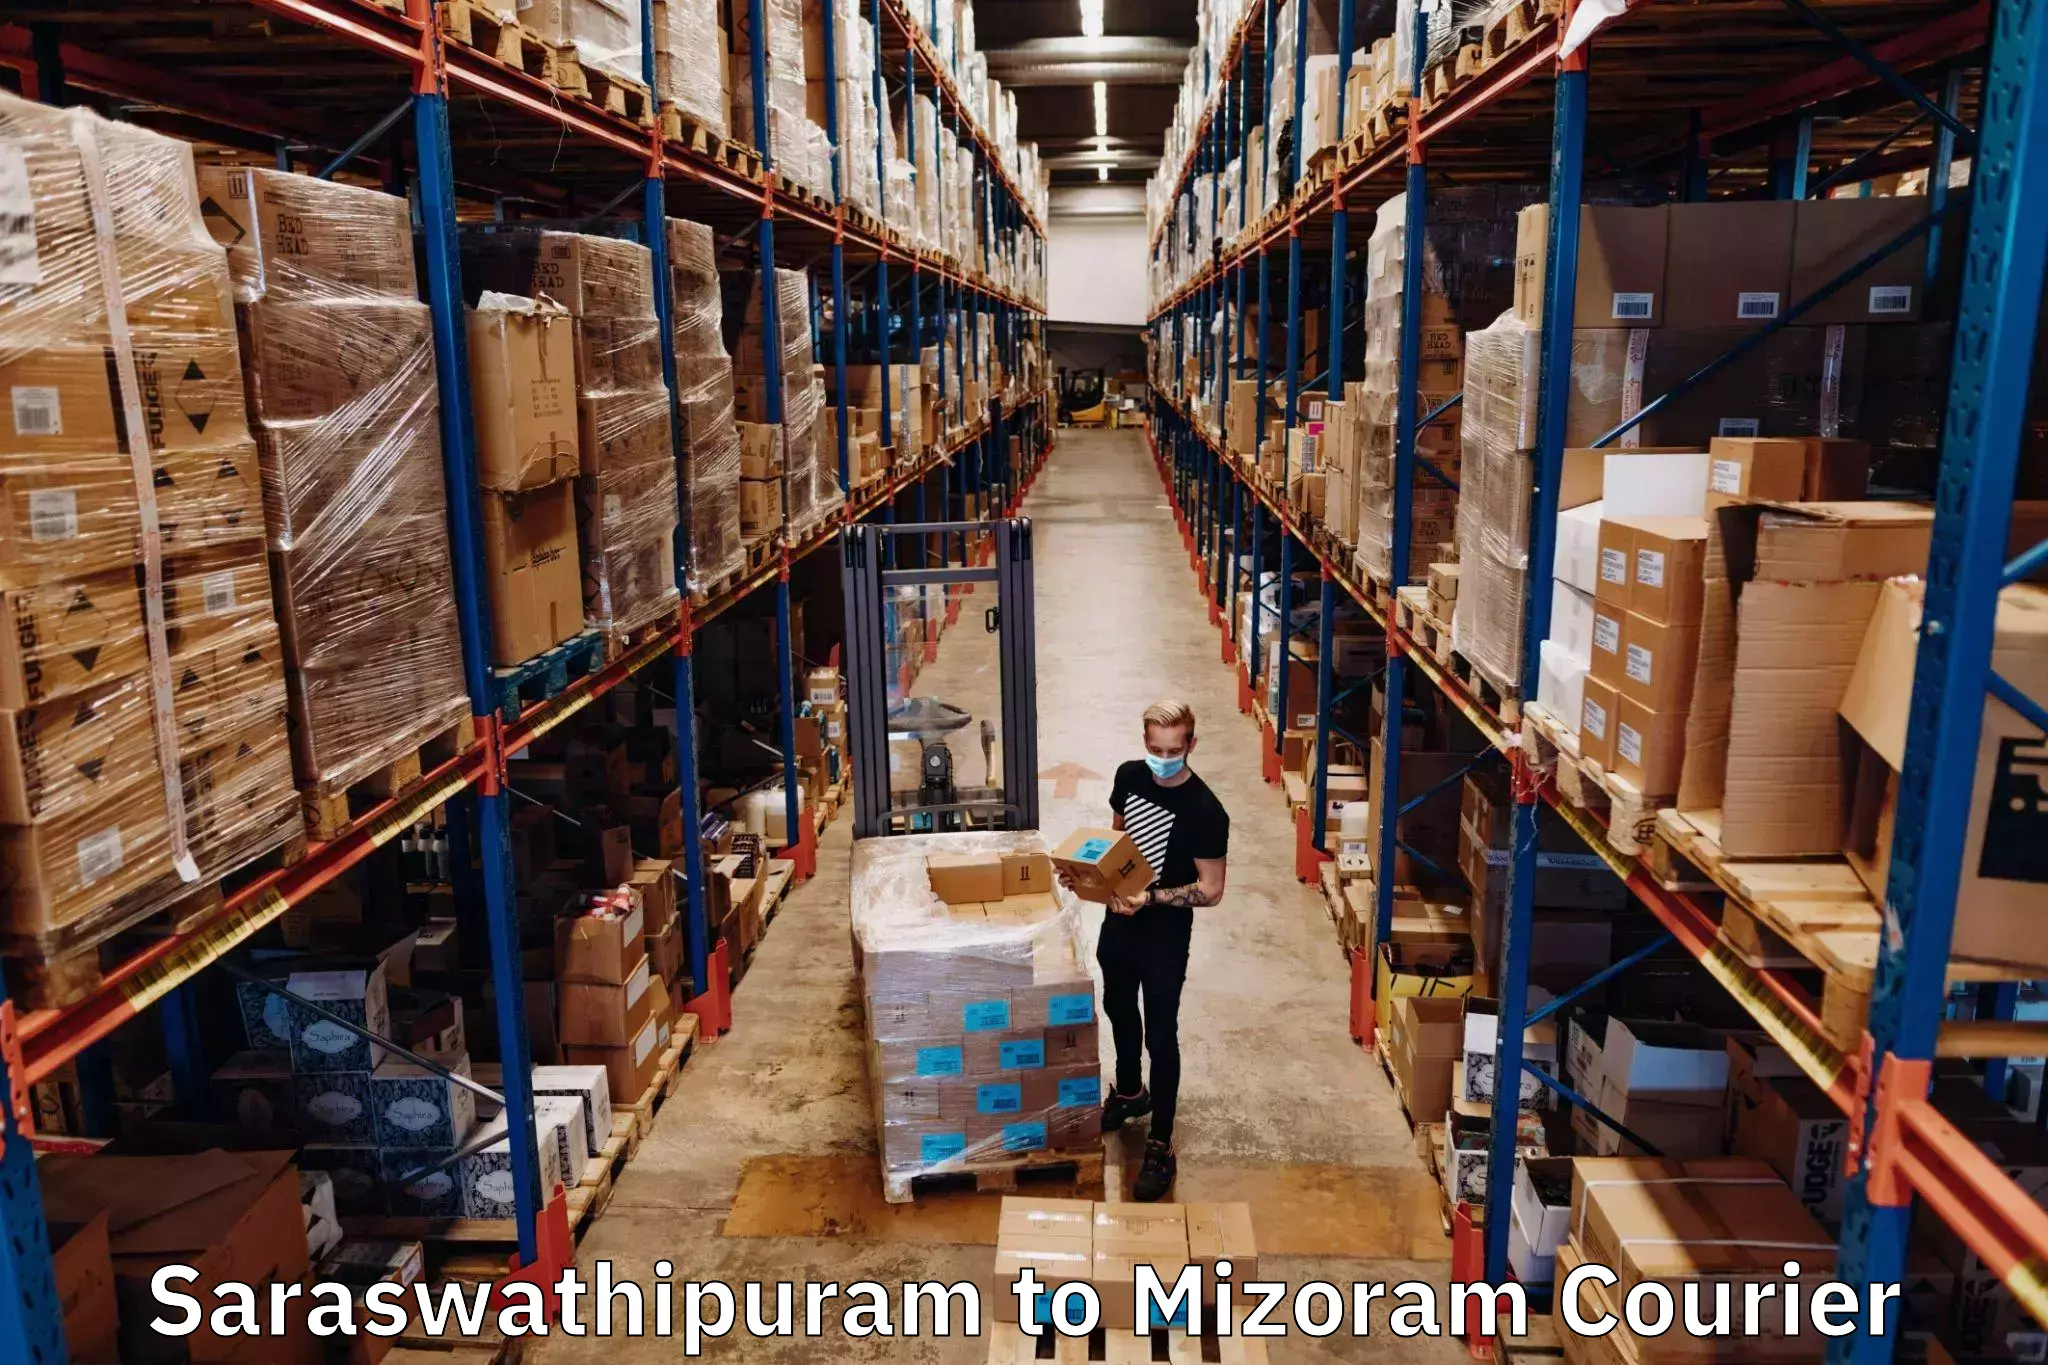 Global courier networks Saraswathipuram to Thenzawl